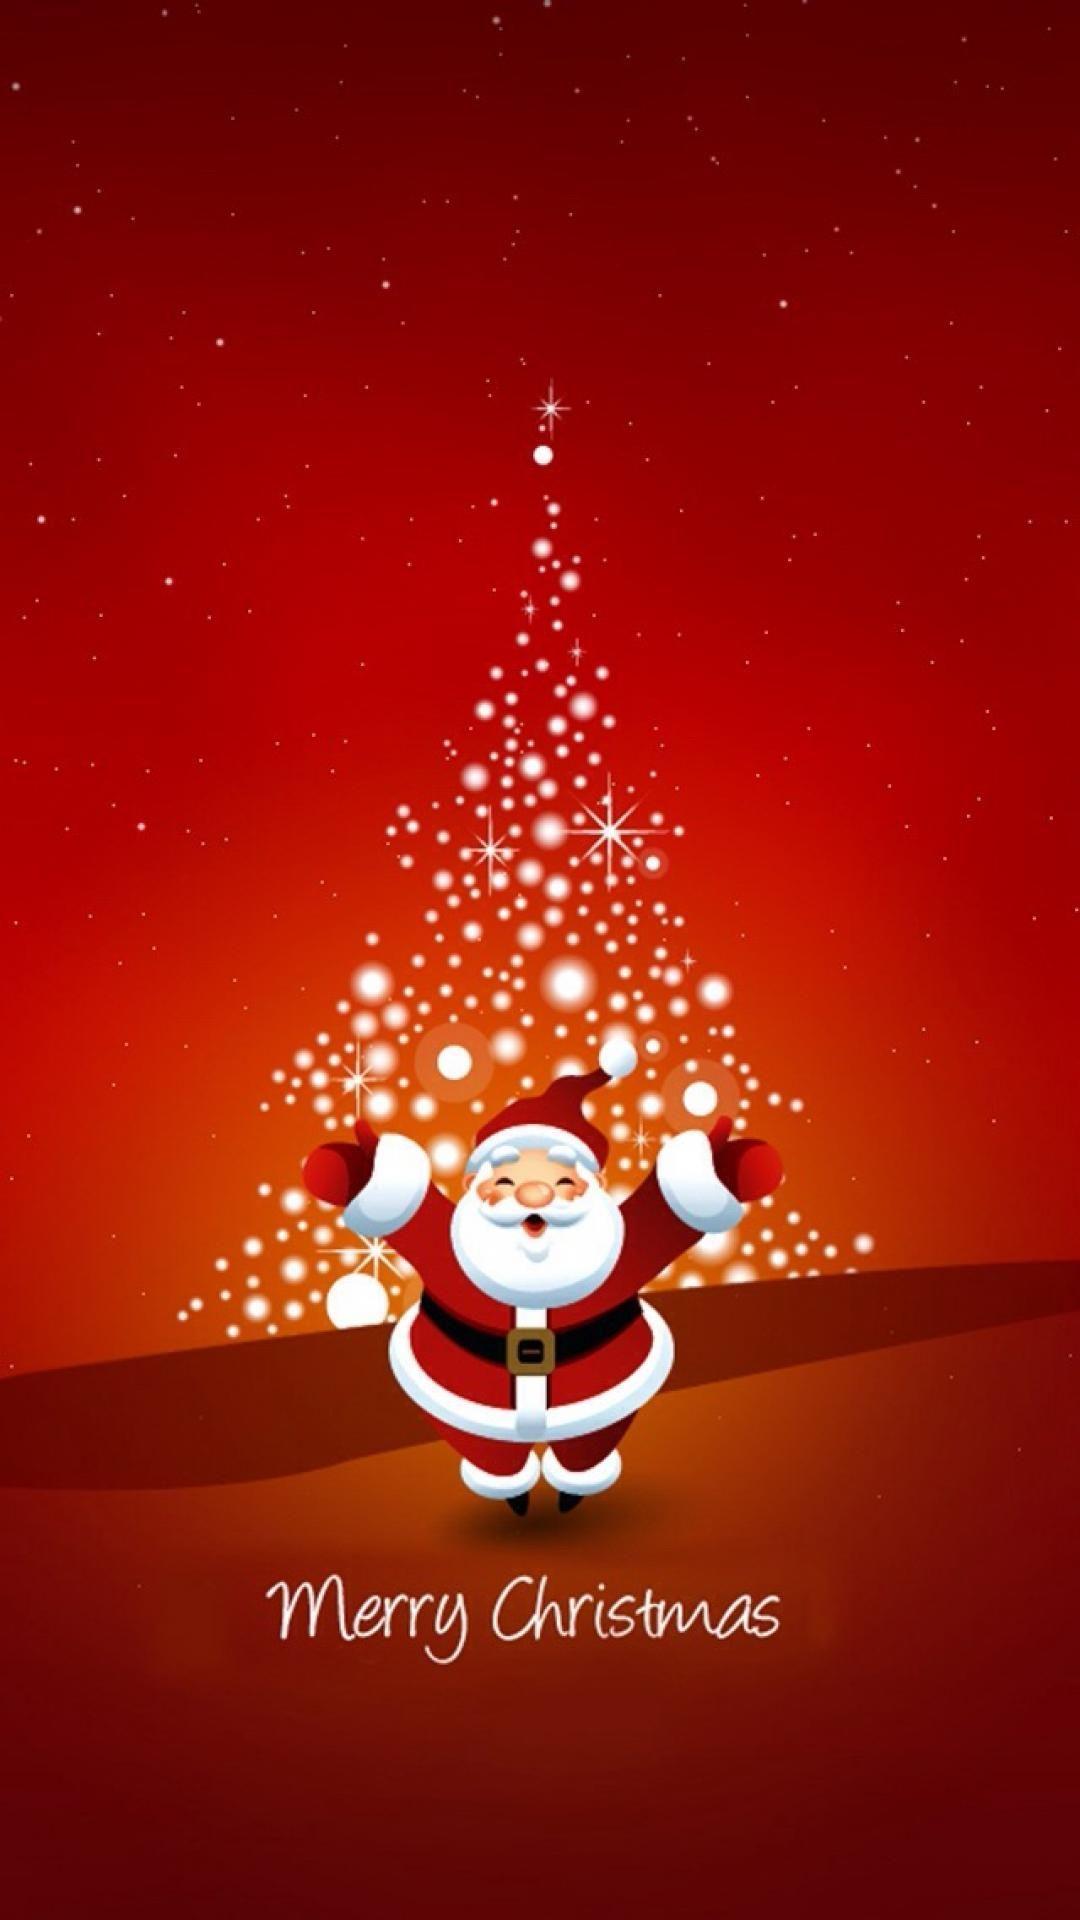 Santa Claus On Board IPhone Wallpaper HD  IPhone Wallpapers  iPhone  Wallpapers